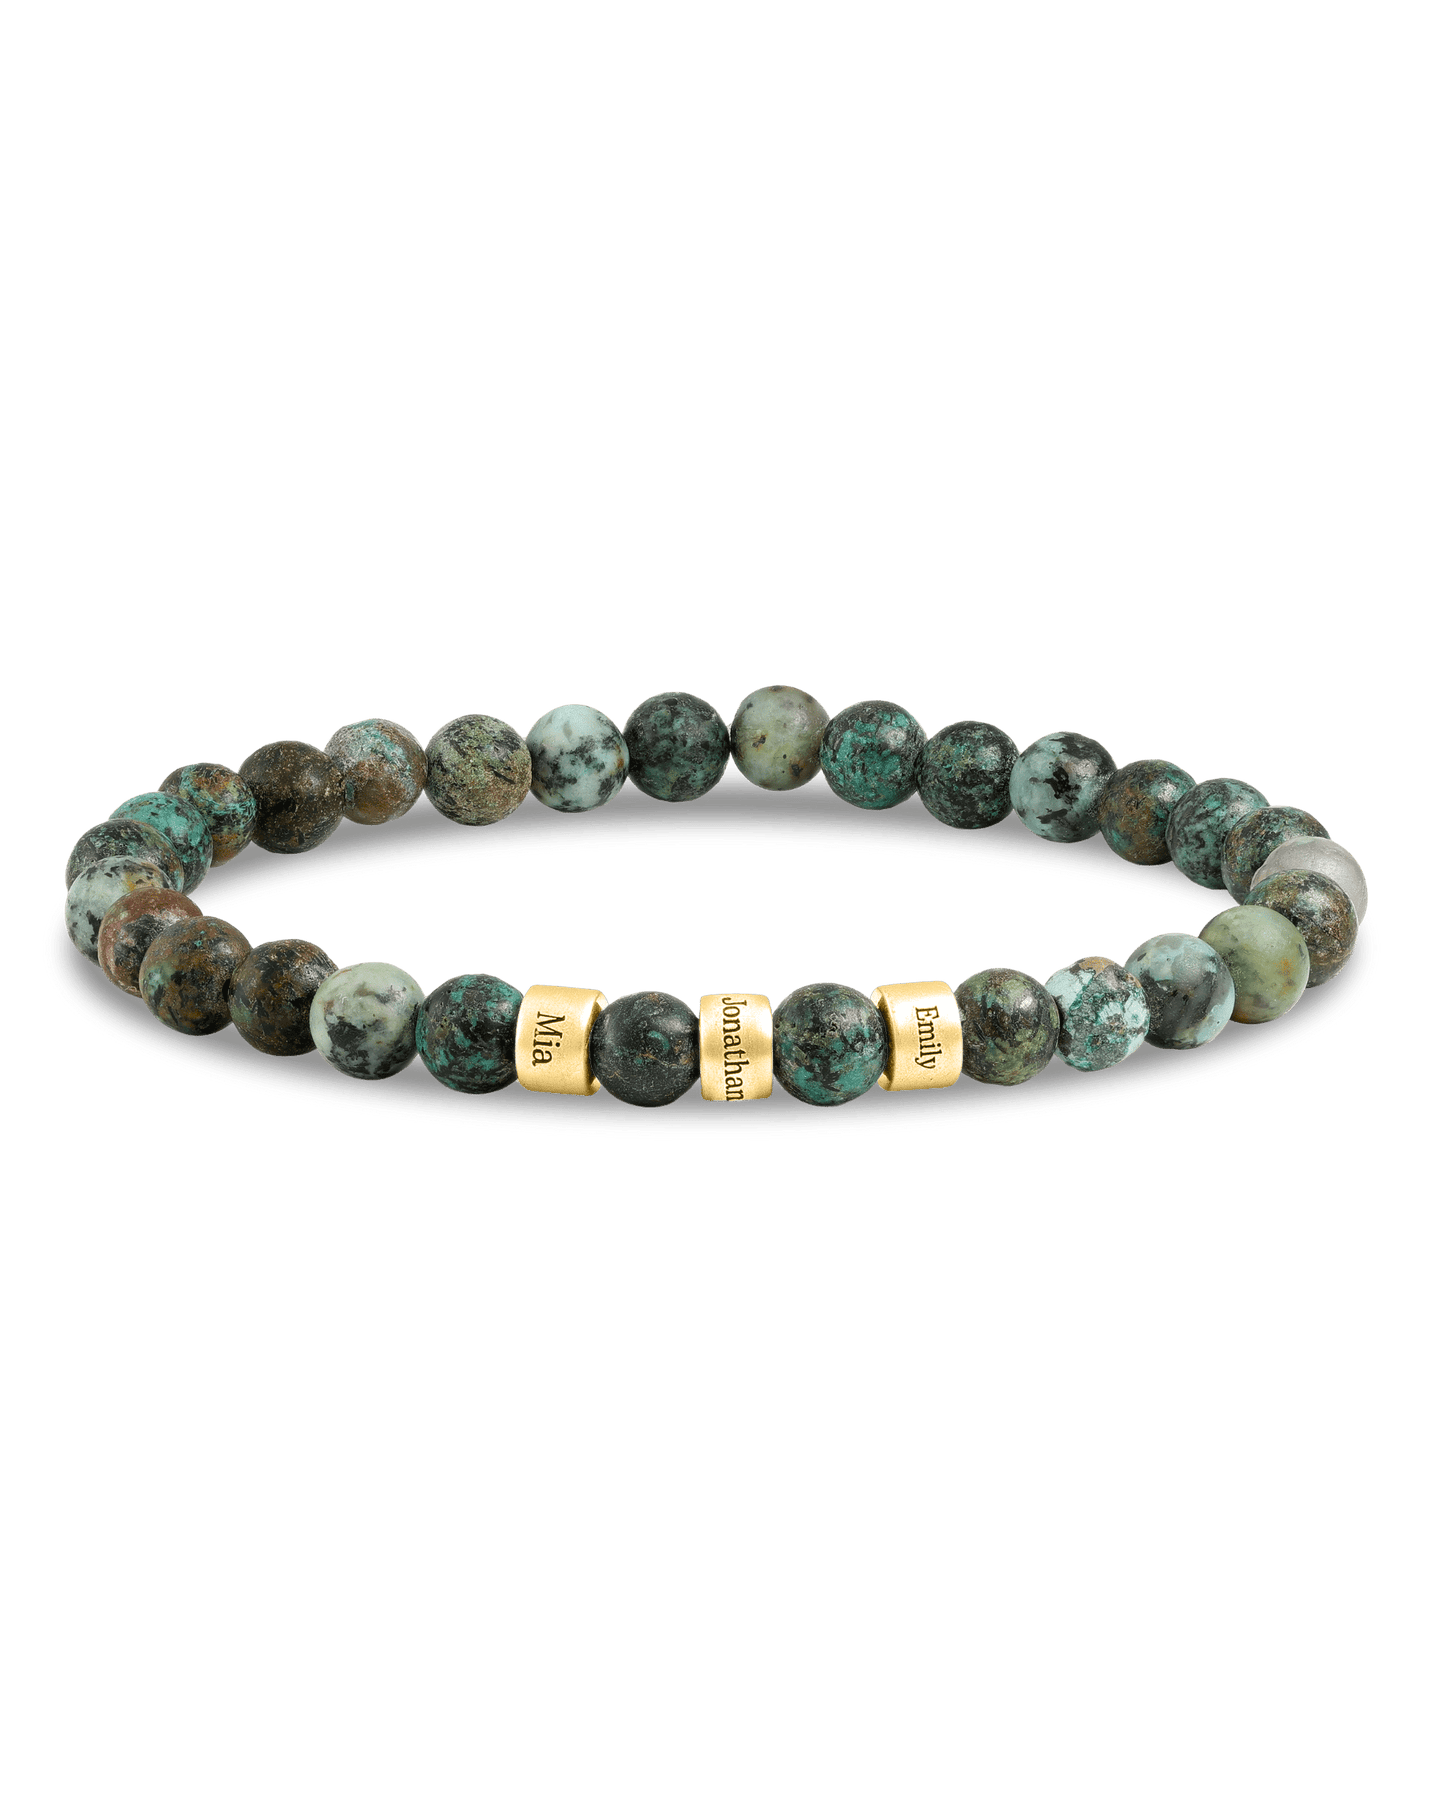 Dad's Legacy Beads Bracelet w/ Black Onyx Stones - 18K Gold Vermeil Bracelets magal-dev Turquoise Gemstone 1 Charm 7.5" M/L Wrist